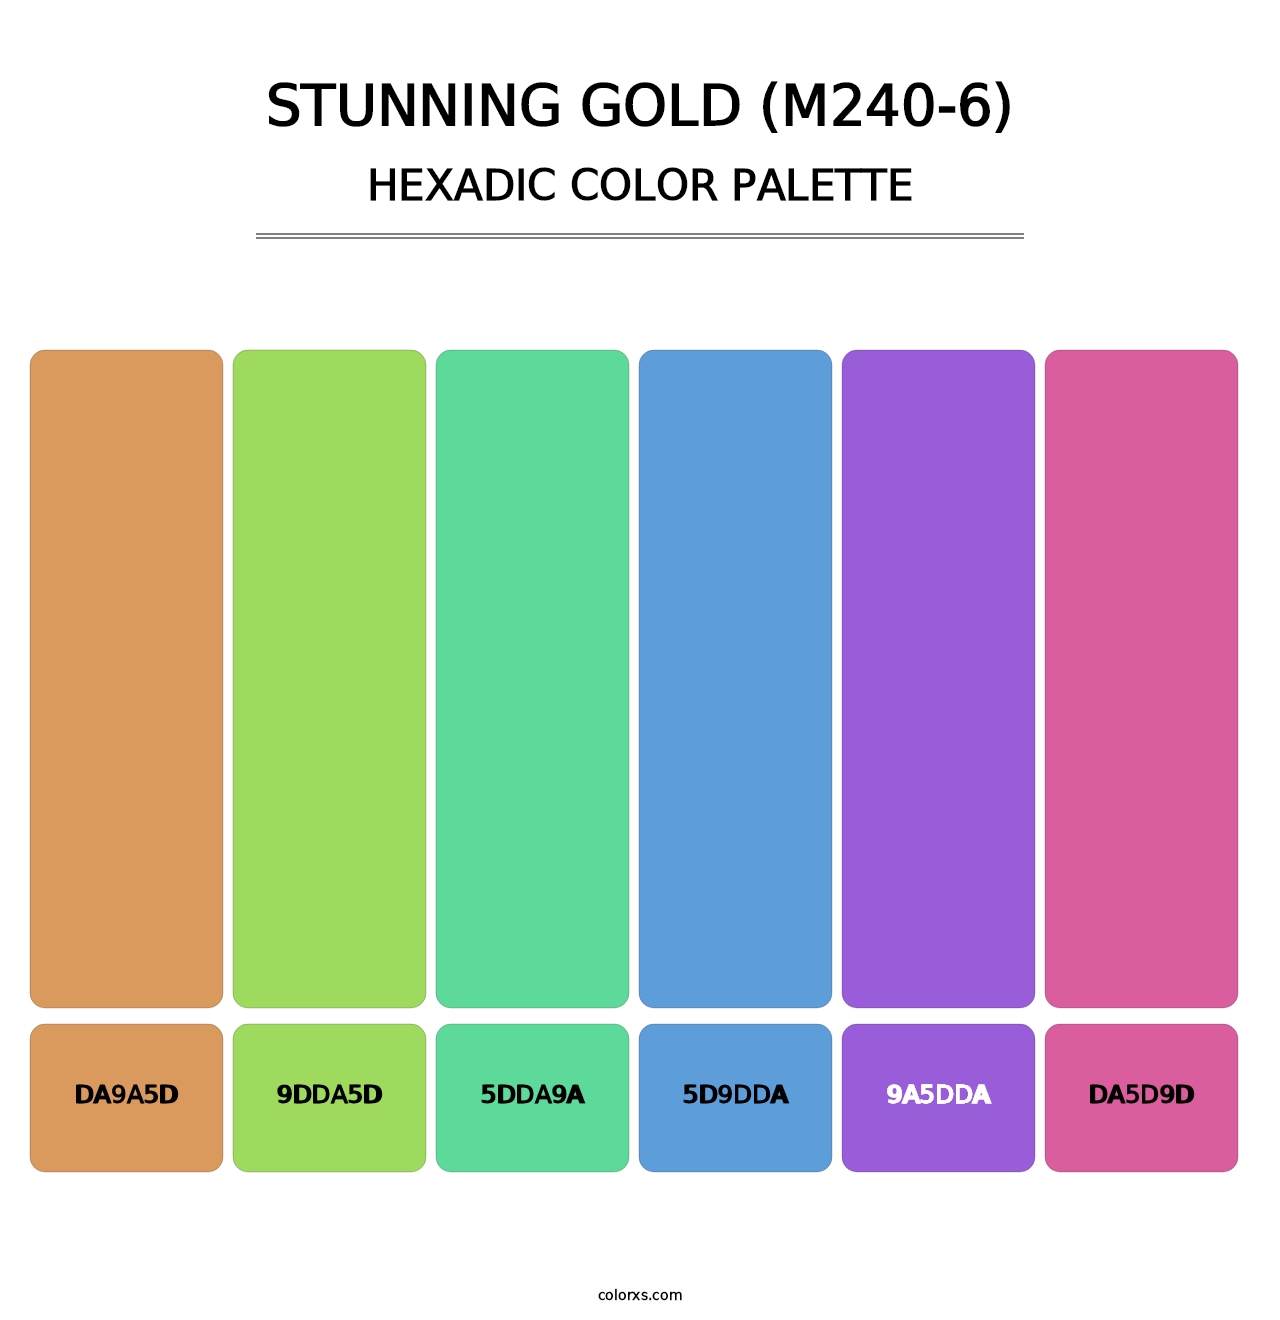 Stunning Gold (M240-6) - Hexadic Color Palette